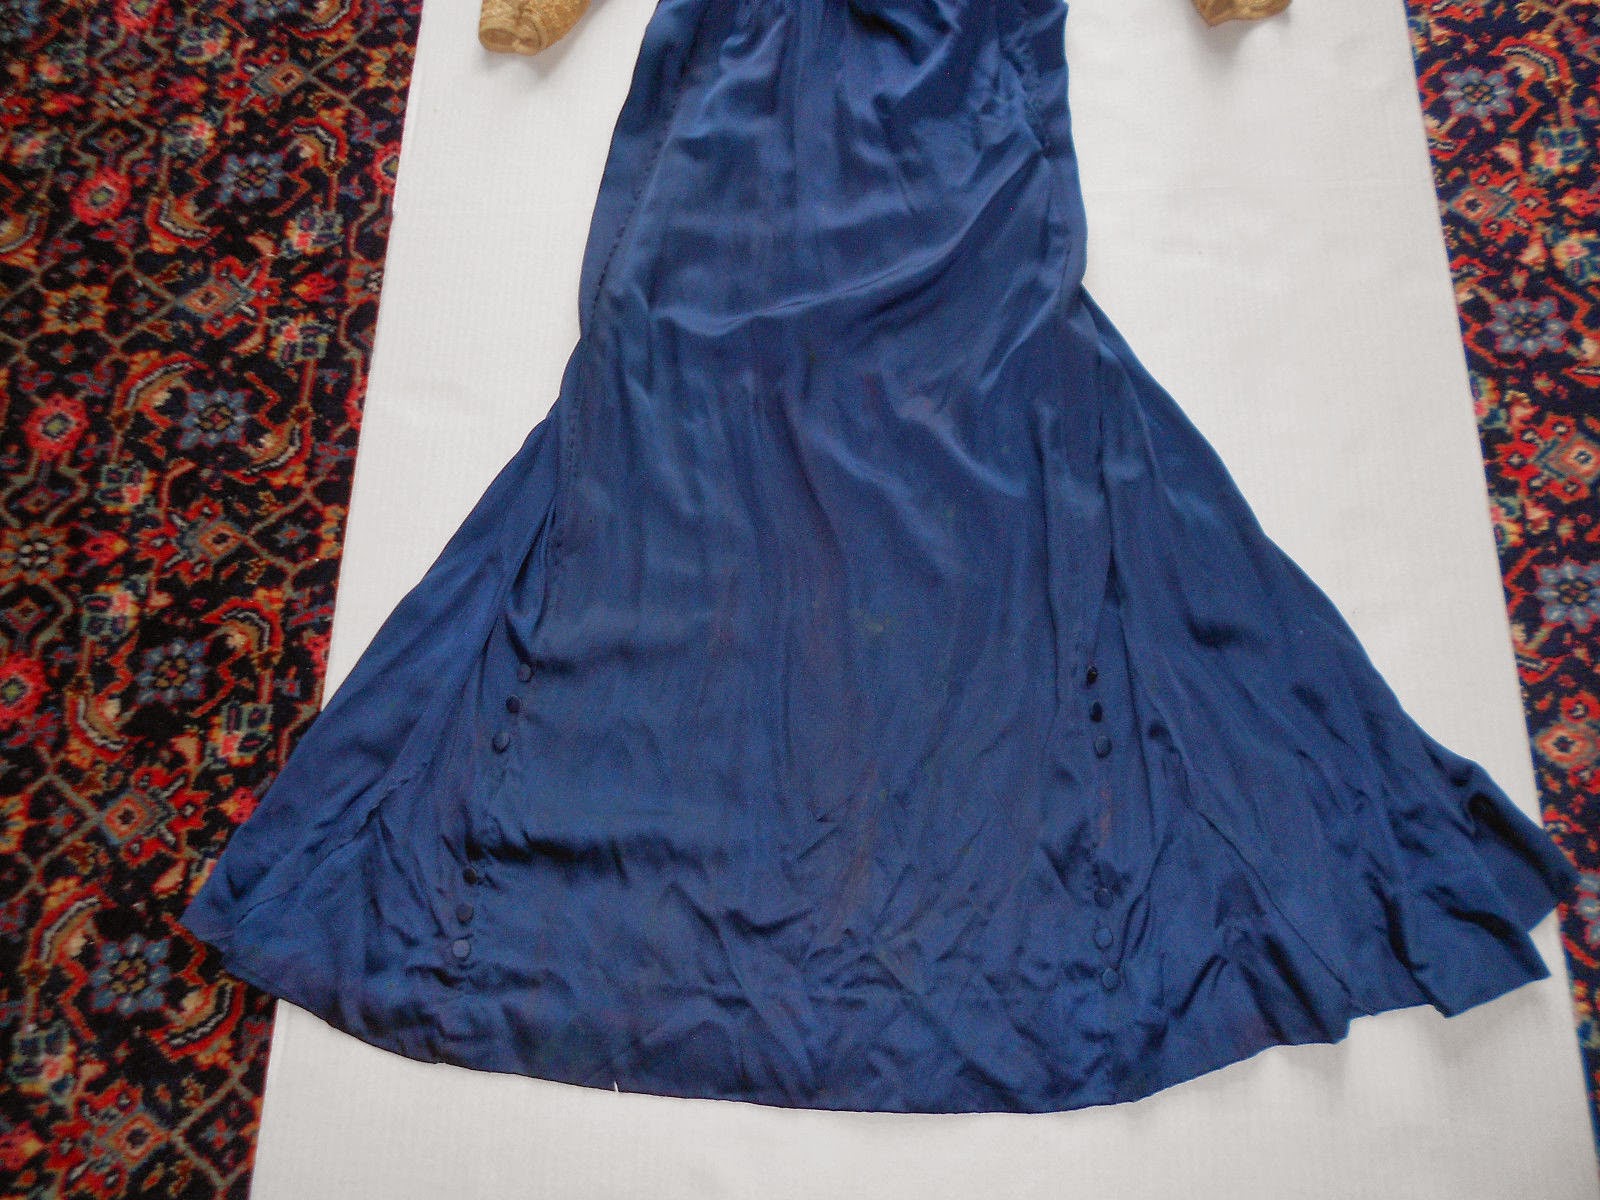 All The Pretty Dresses: Late Edwardian Era Blue Dress